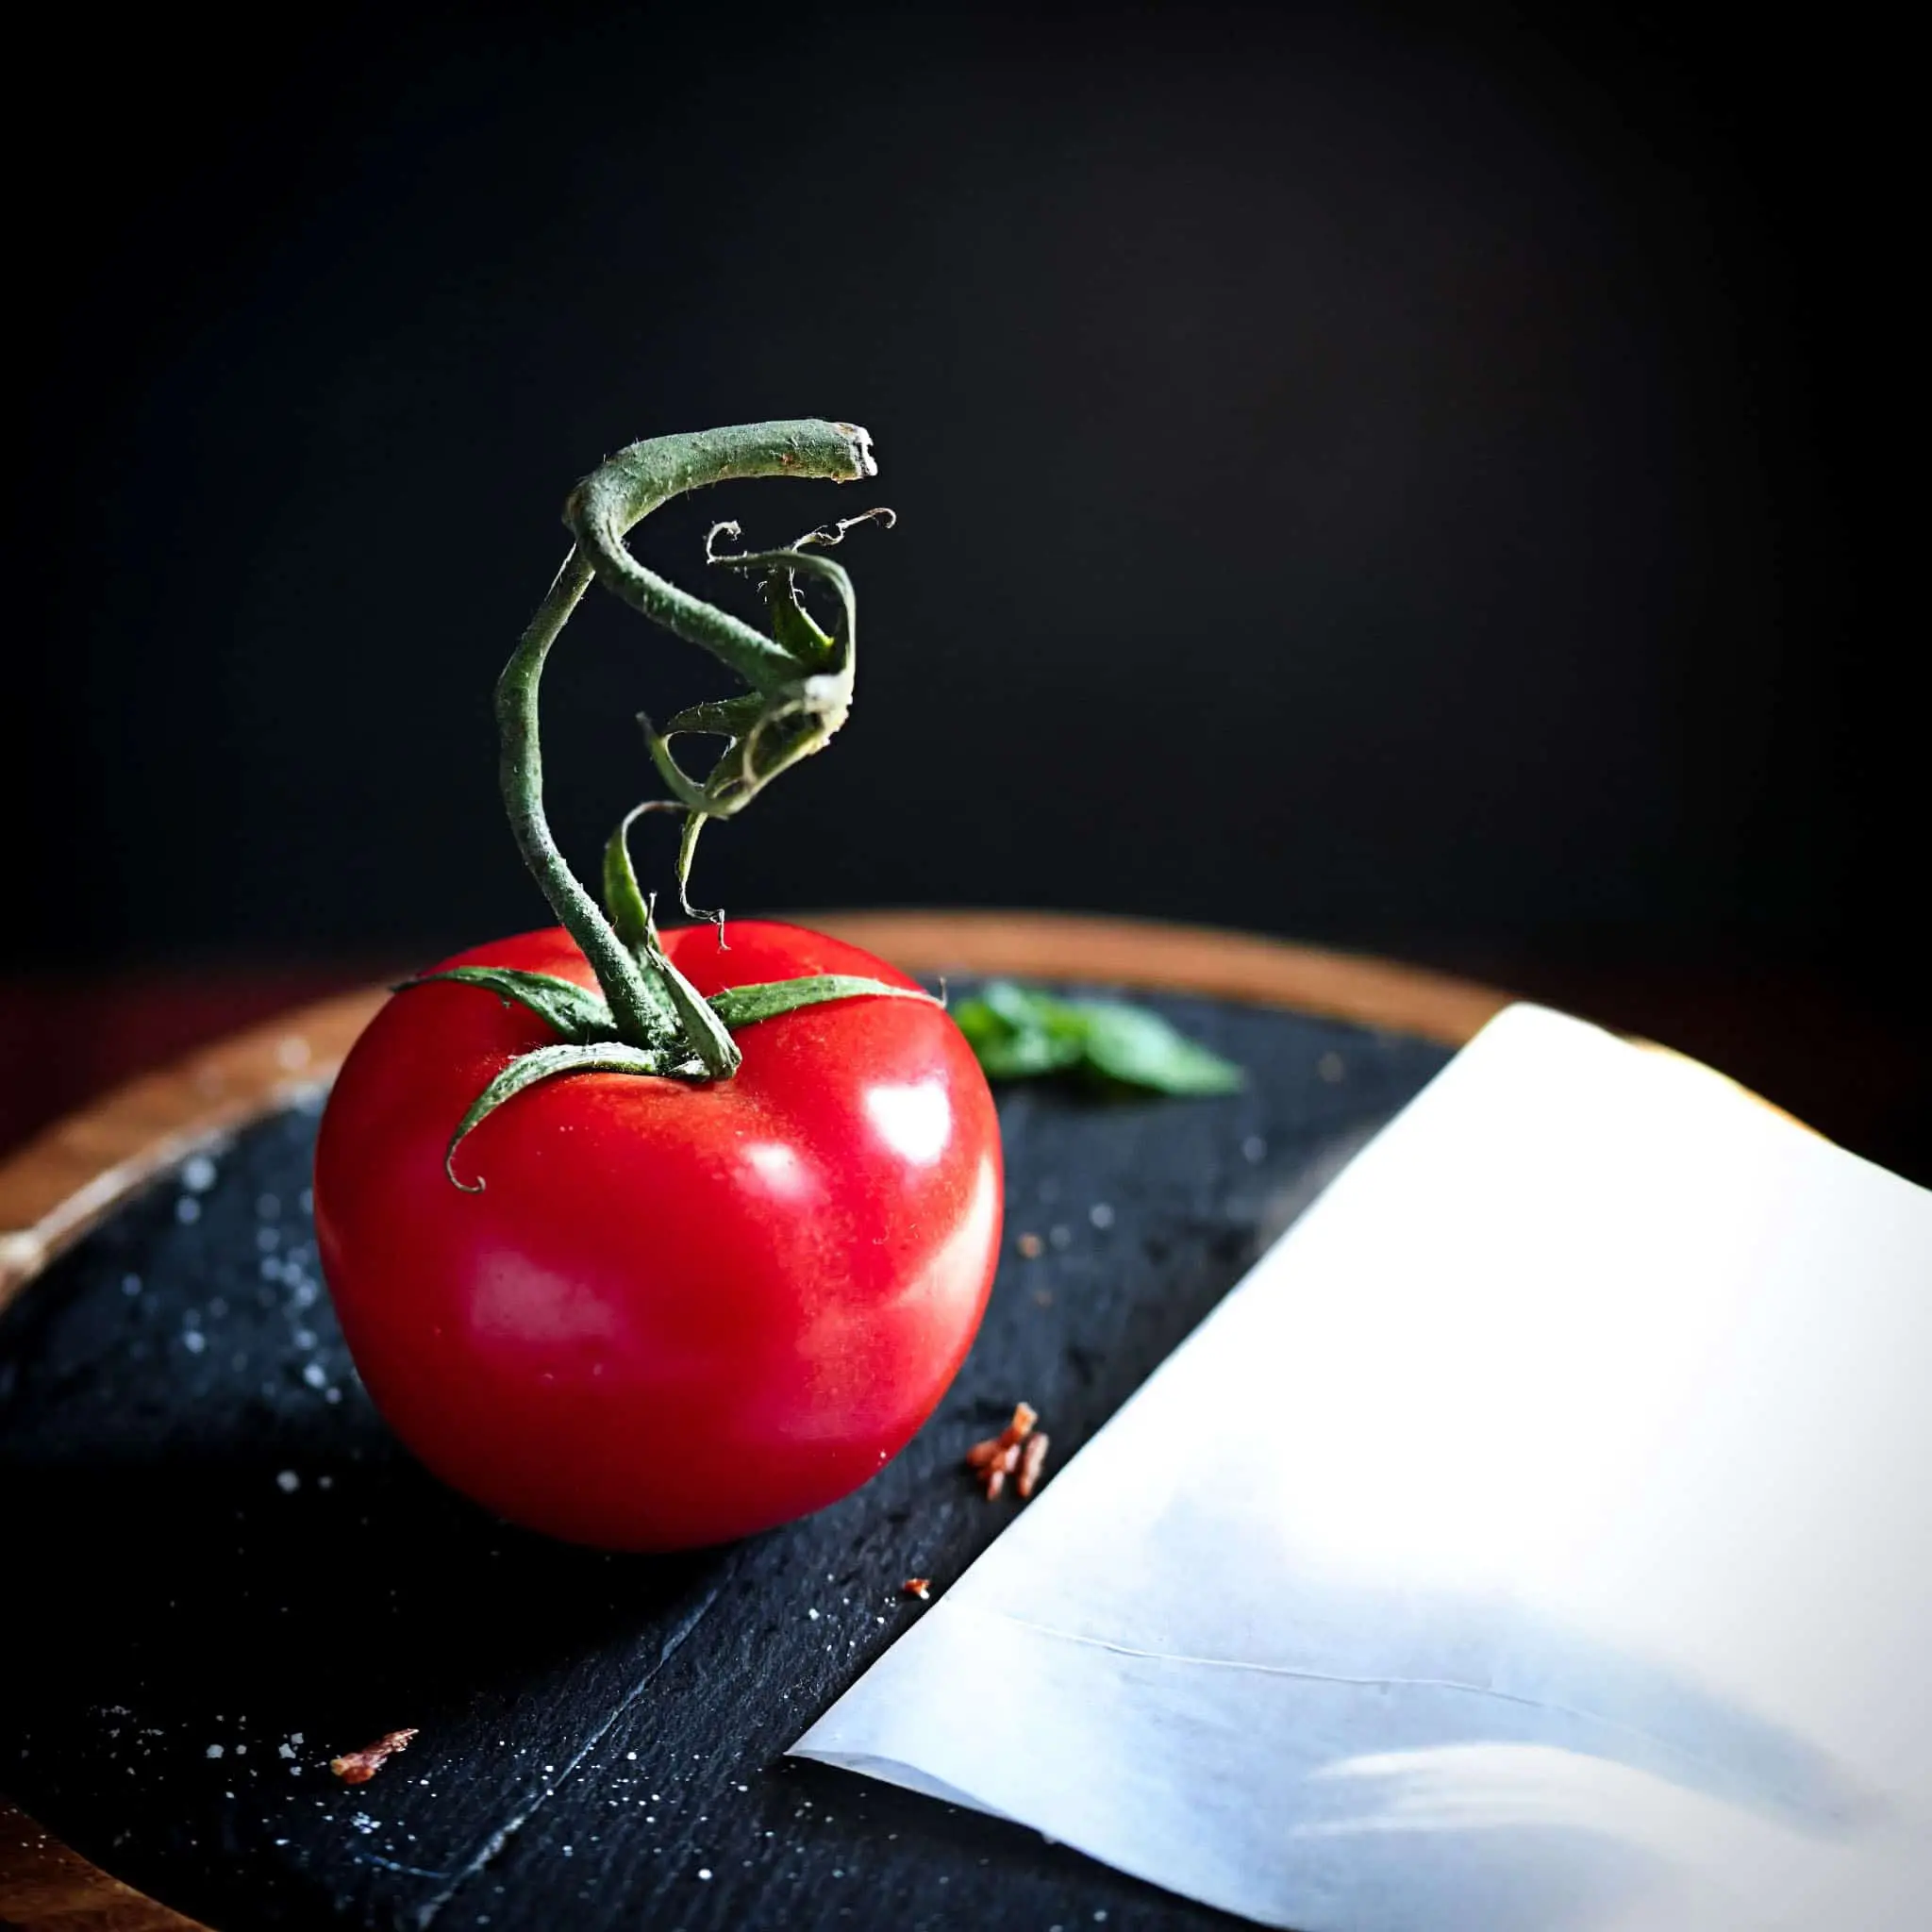 tomato on the vine